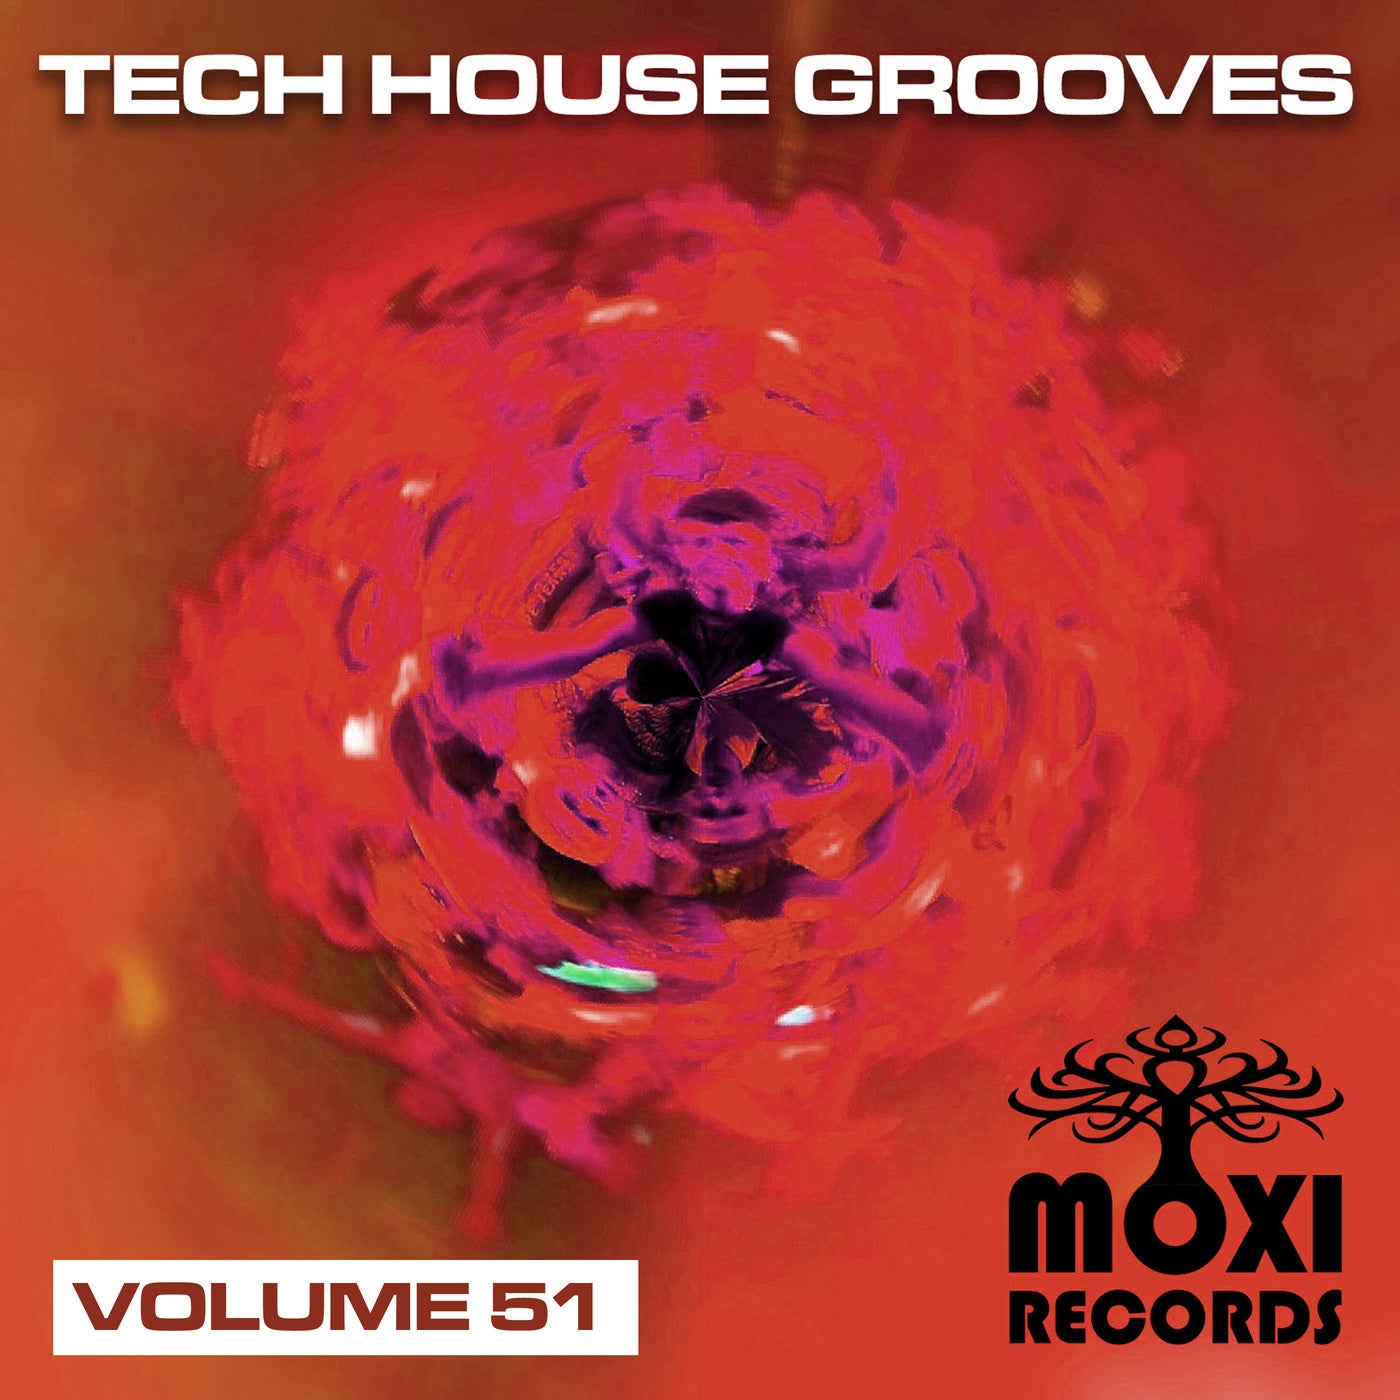 Tech House Grooves Volume 51